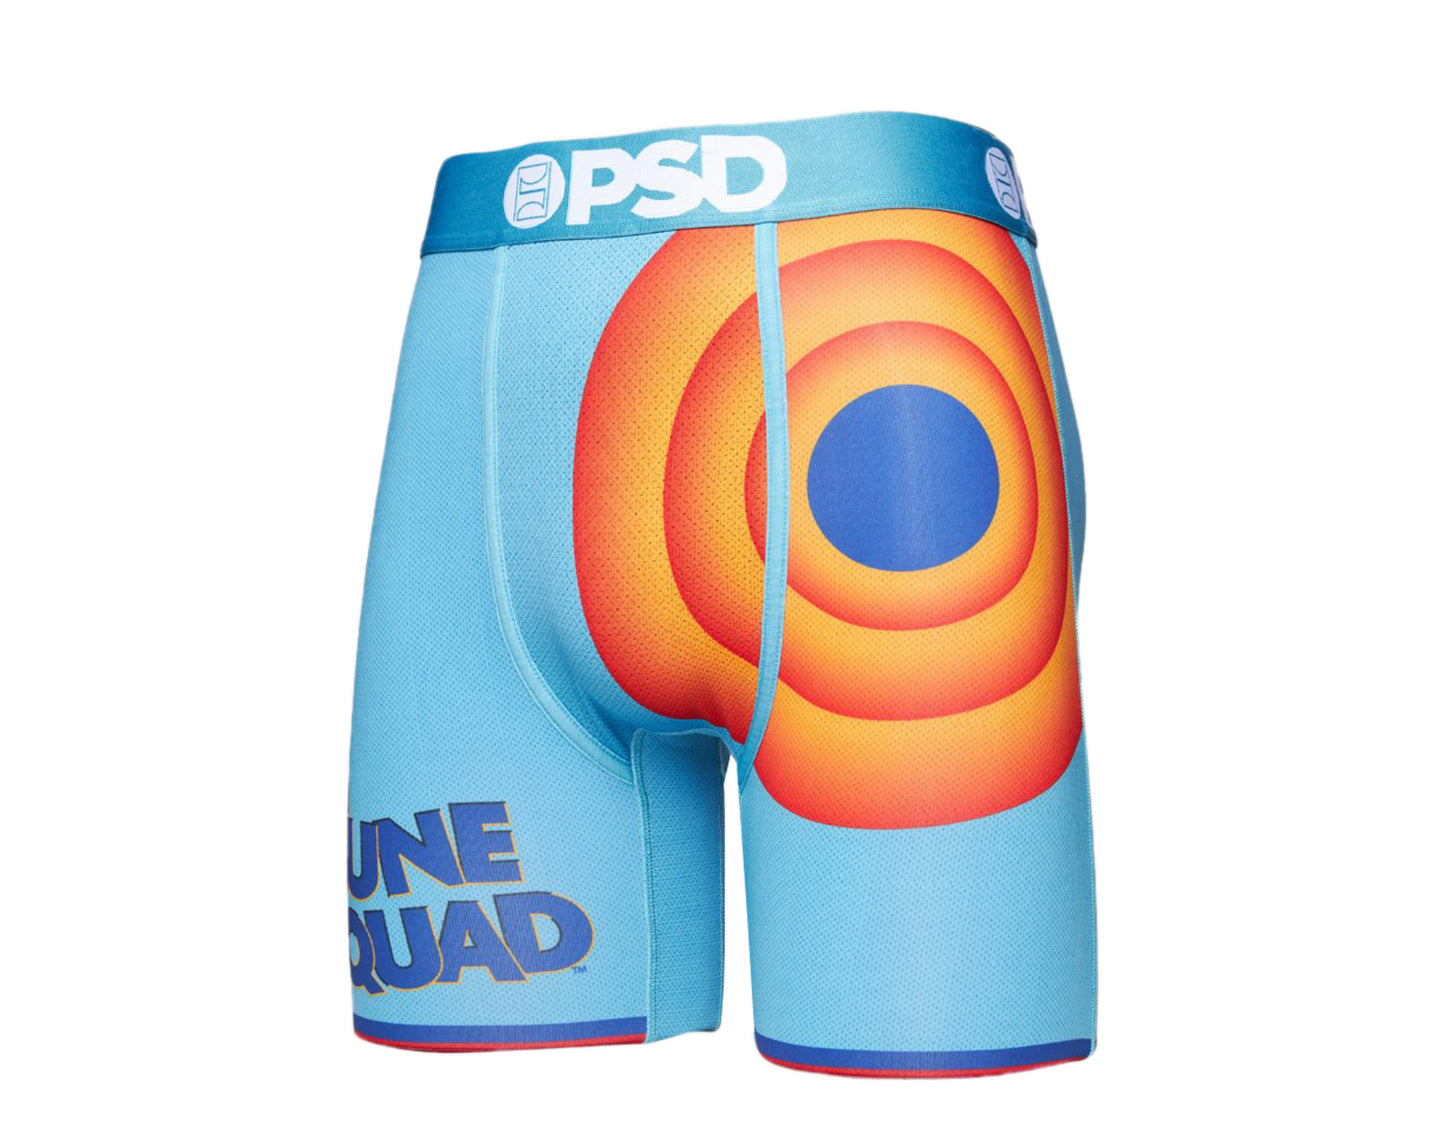 PSD Space Jam 2 - Kit Boxer Briefs Men's Underwear